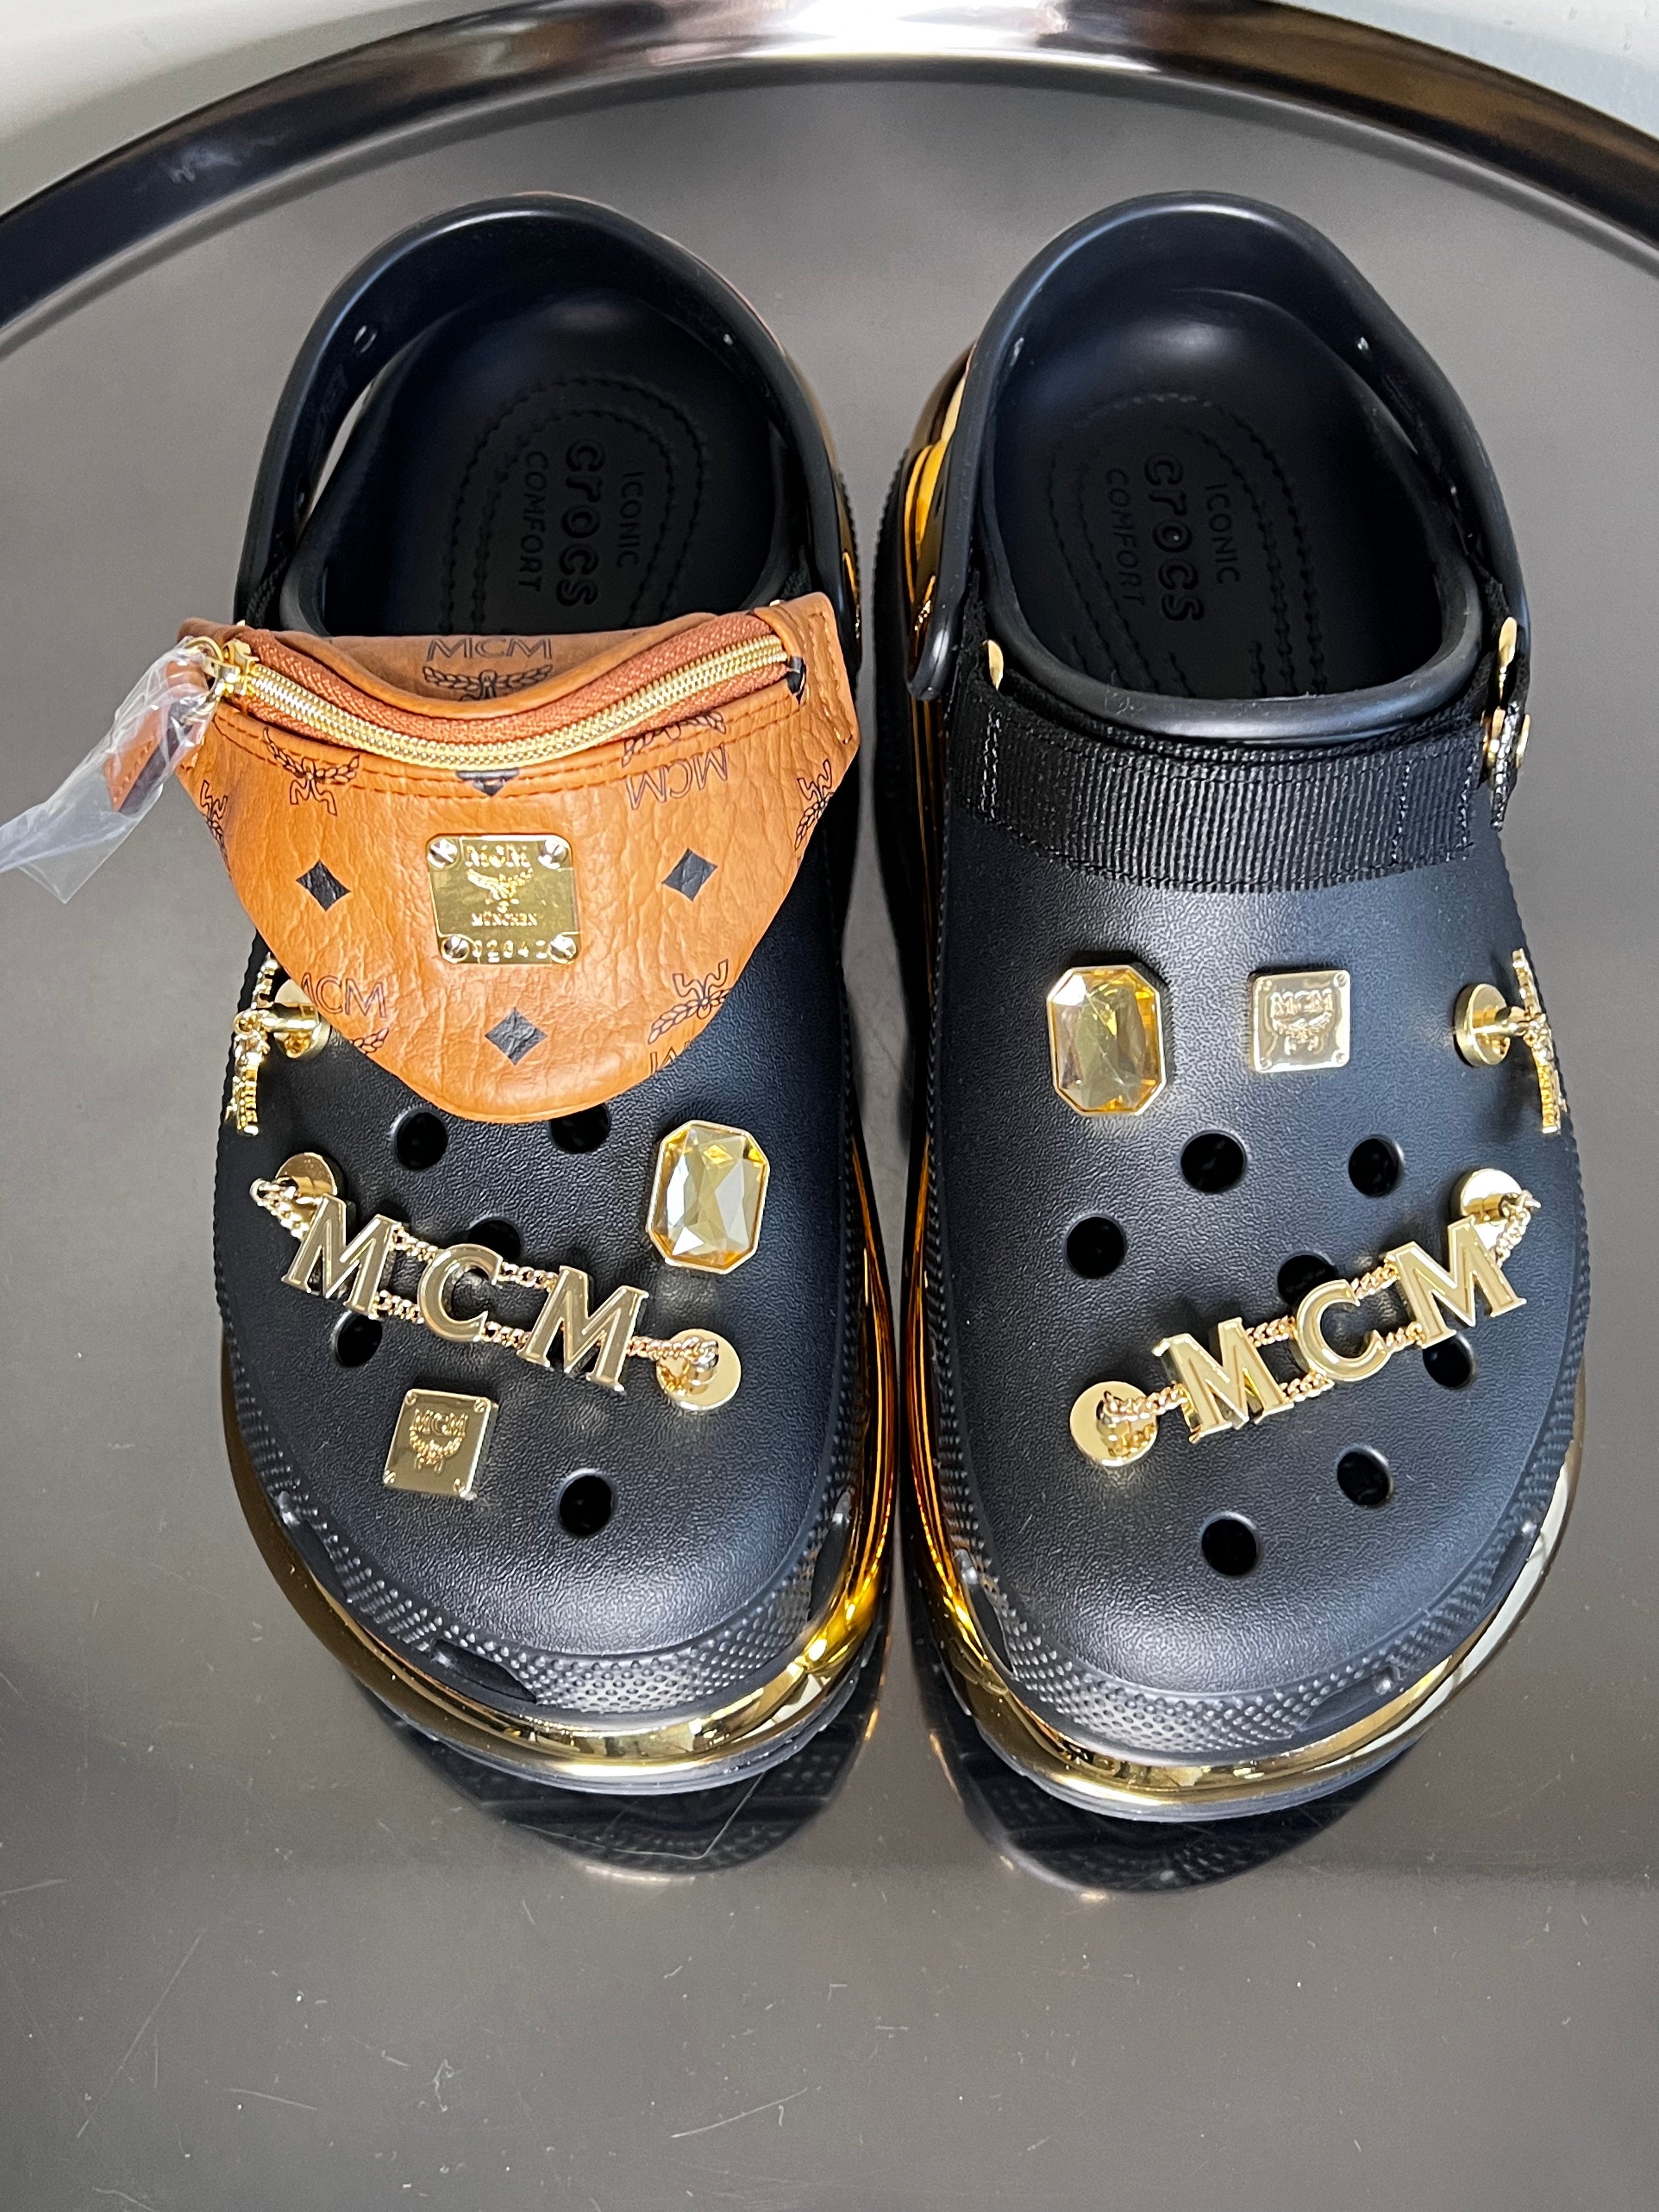 Black with gold Mega crush clog with belt bag bling - MCM x Crocs